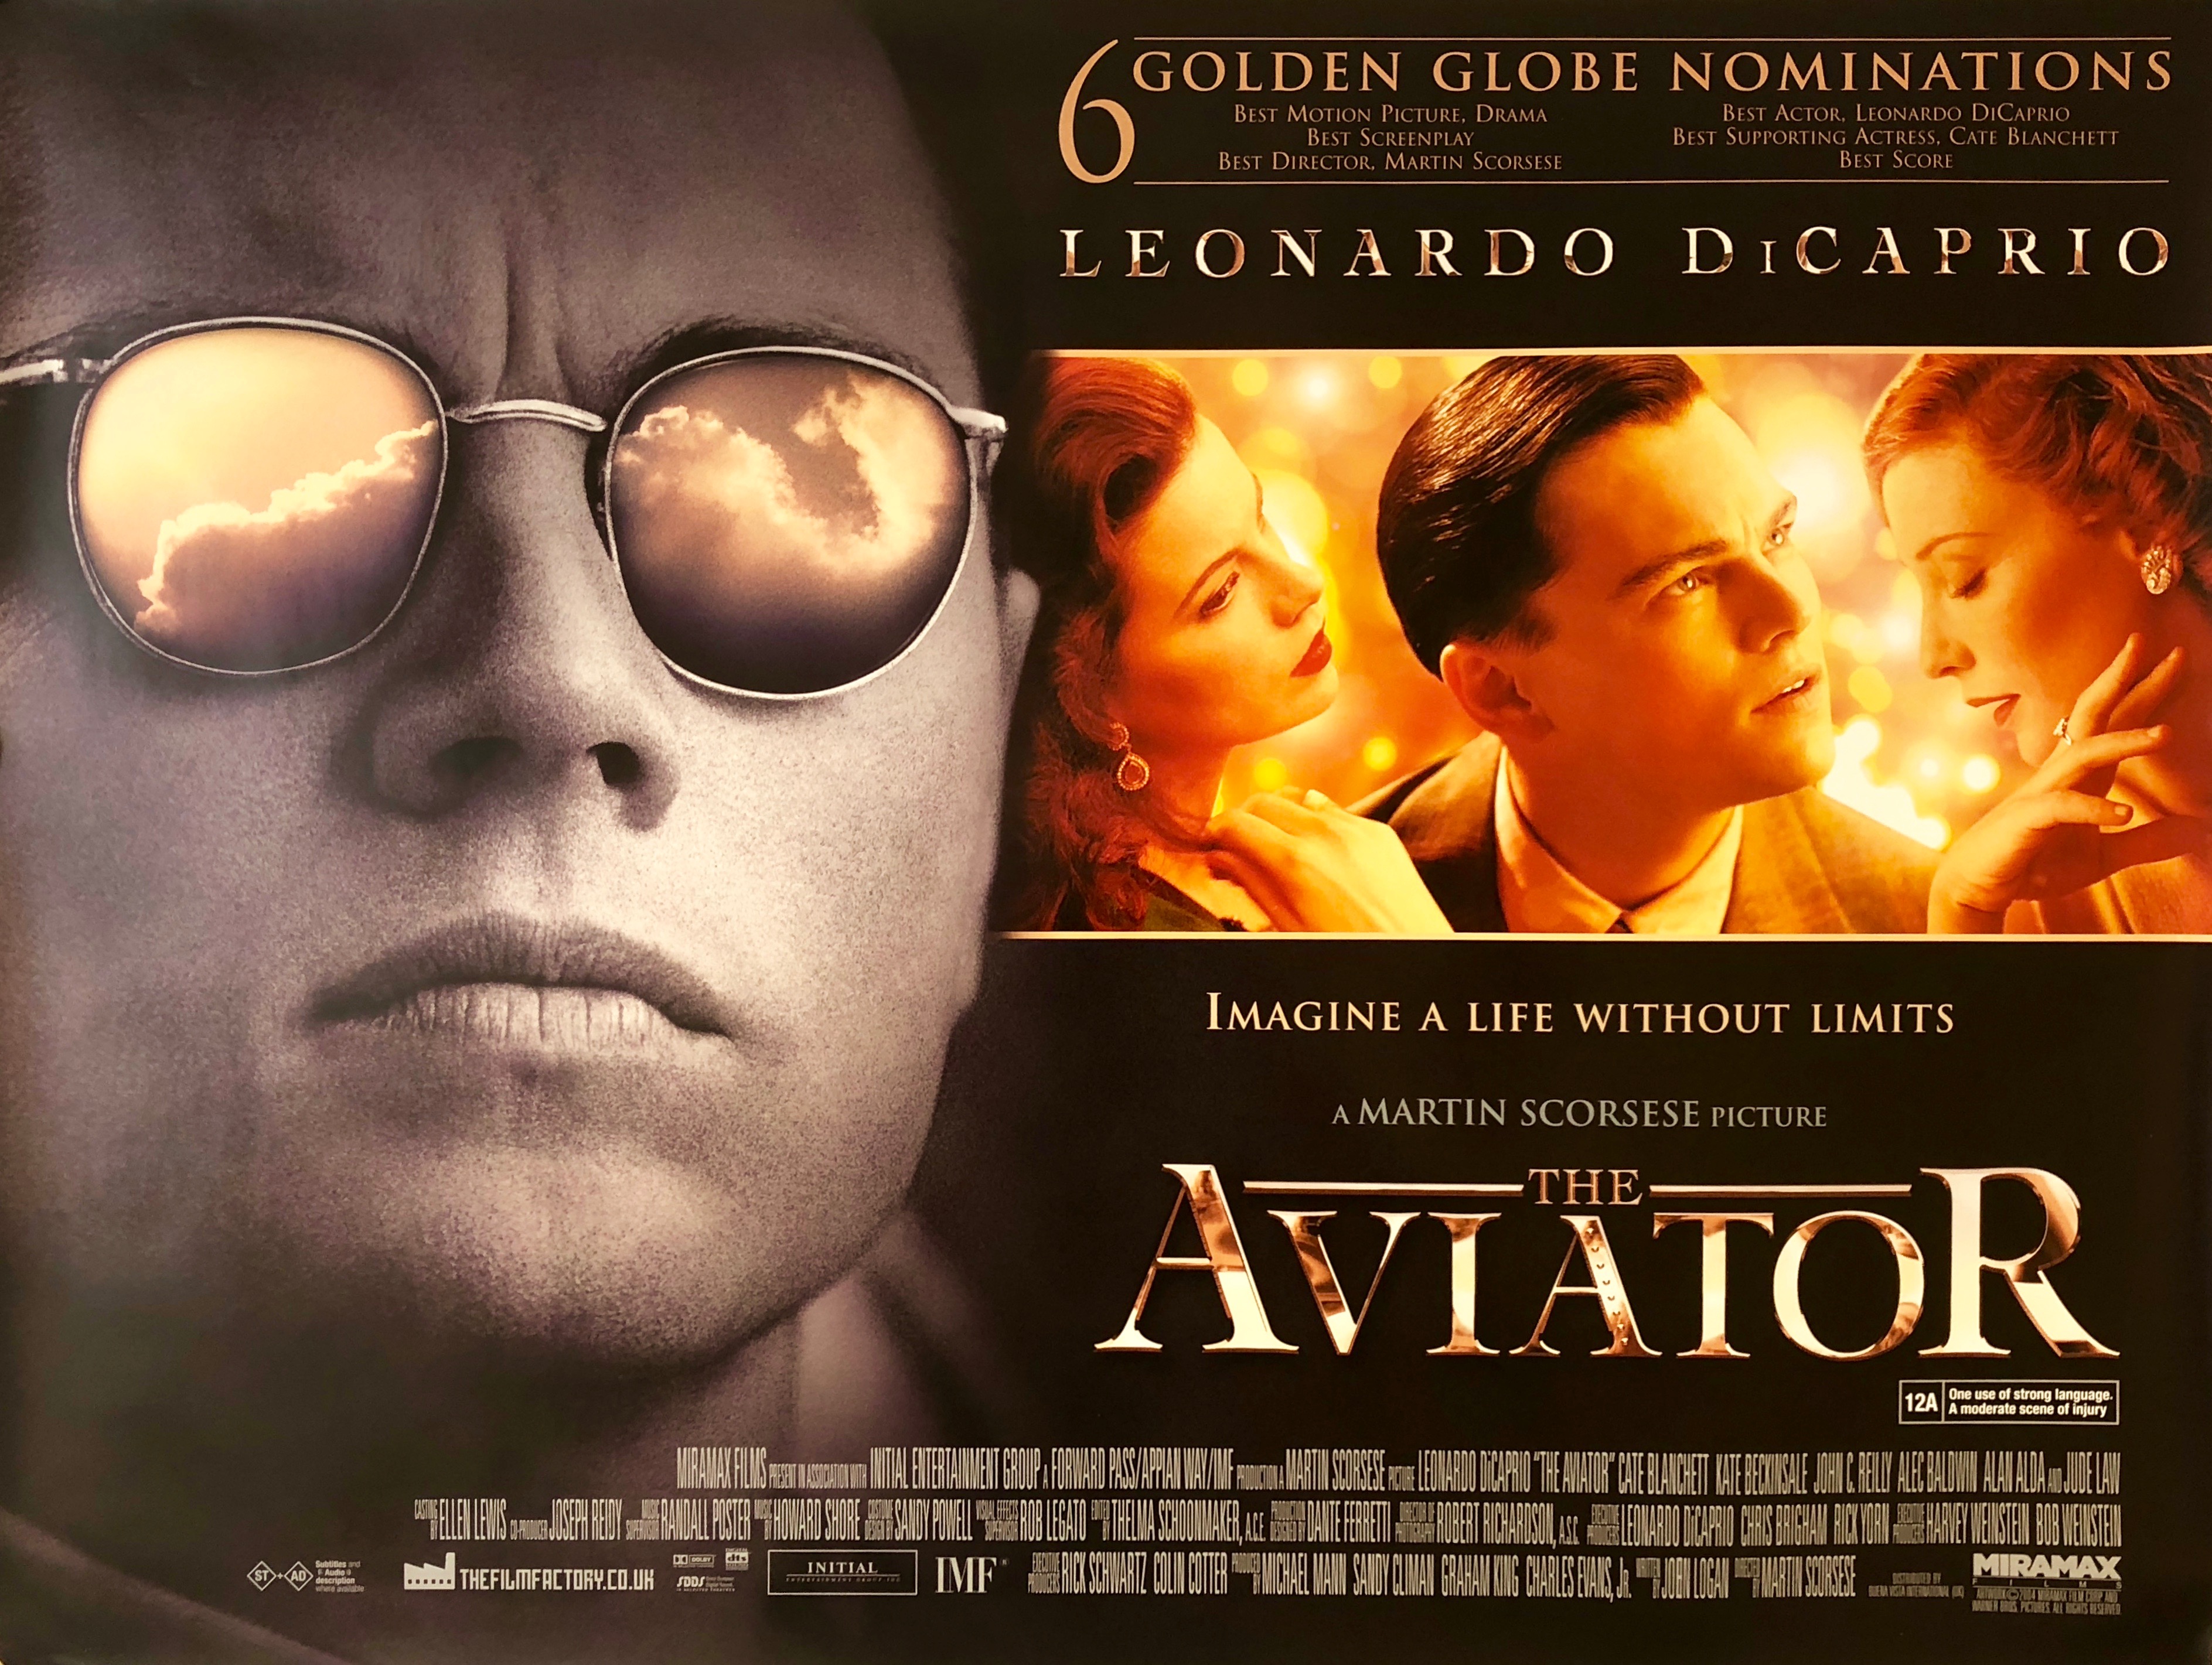 THE AVIATOR MOVIE POSTER 1 SIDED LEONARDO DICAPRIO HOWARD HUGHES STORY 